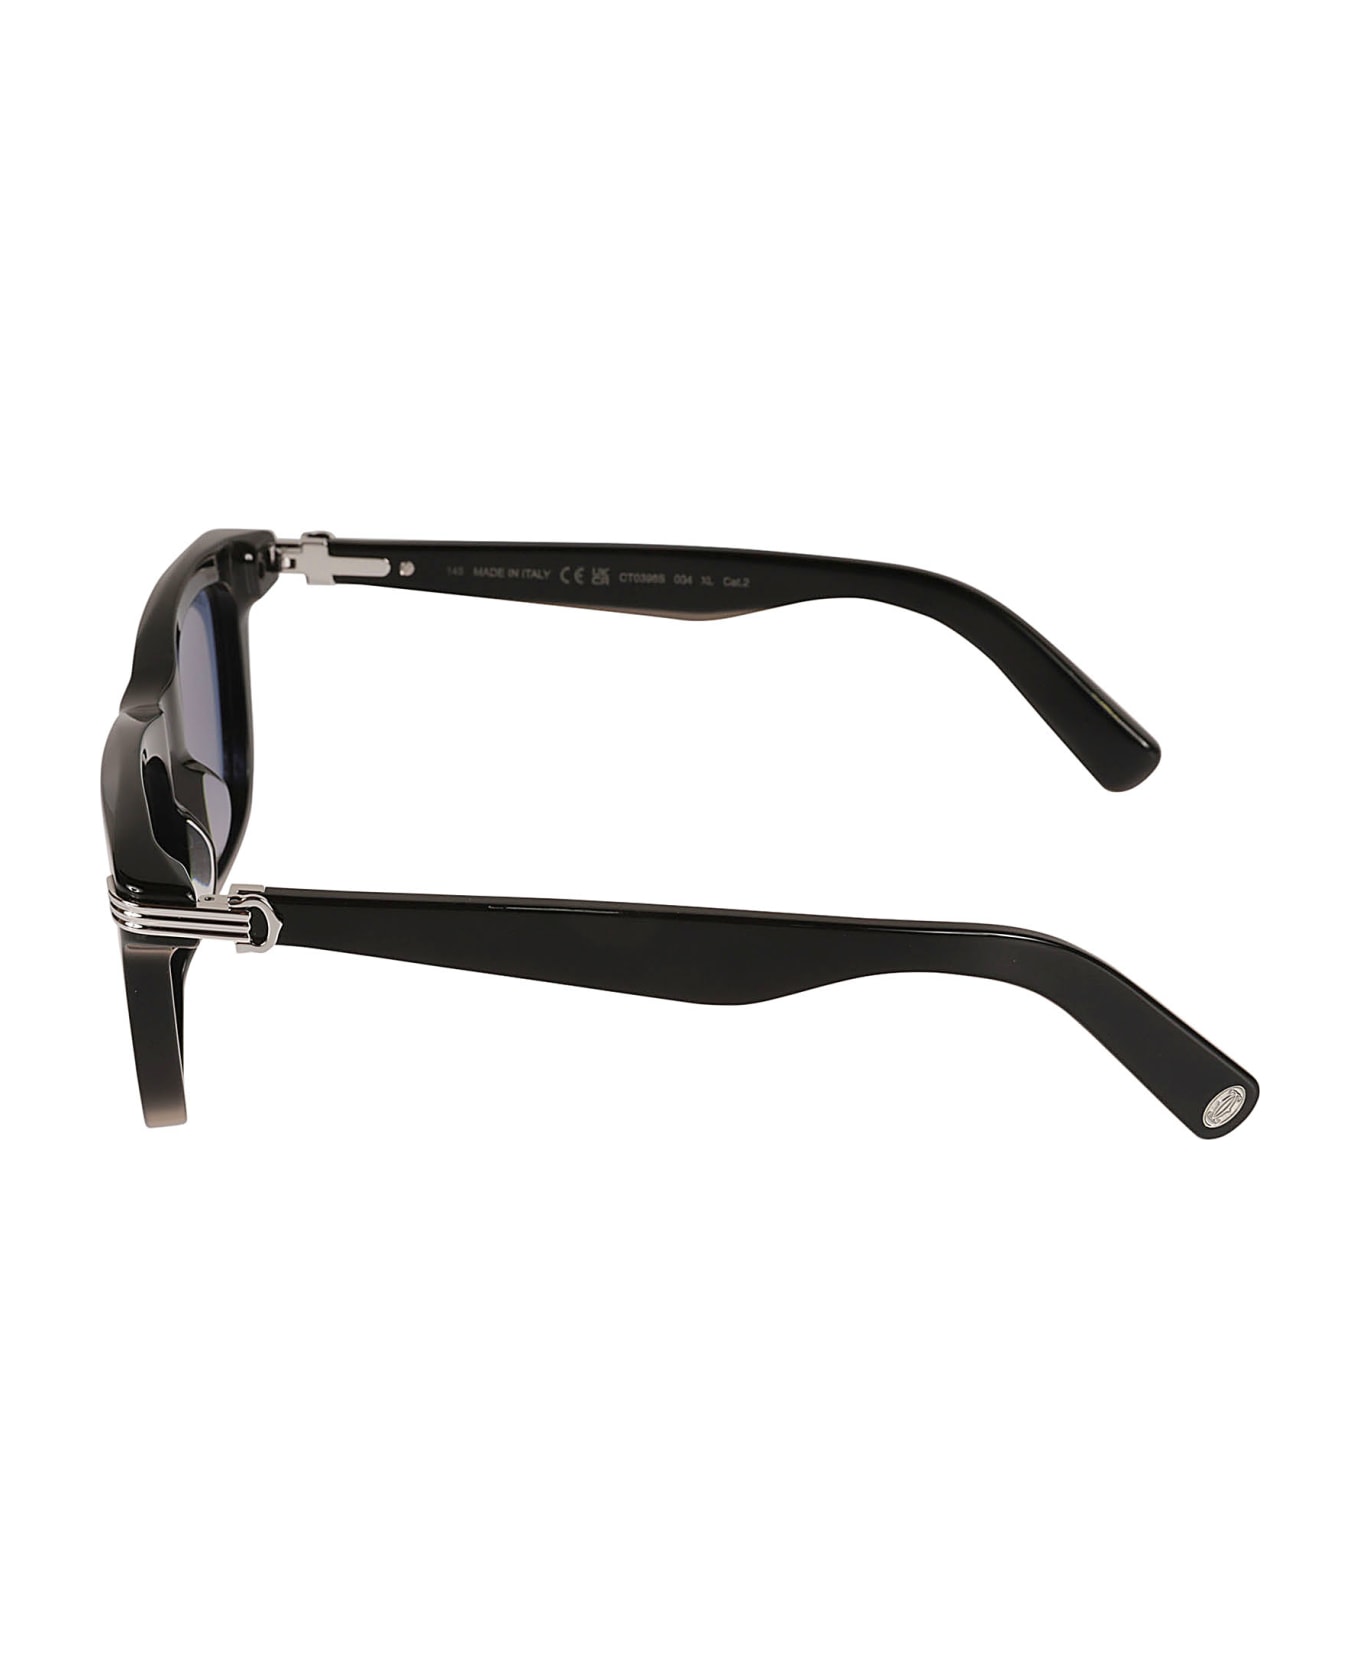 Cartier Eyewear Square Sunglasses - Black/Blue